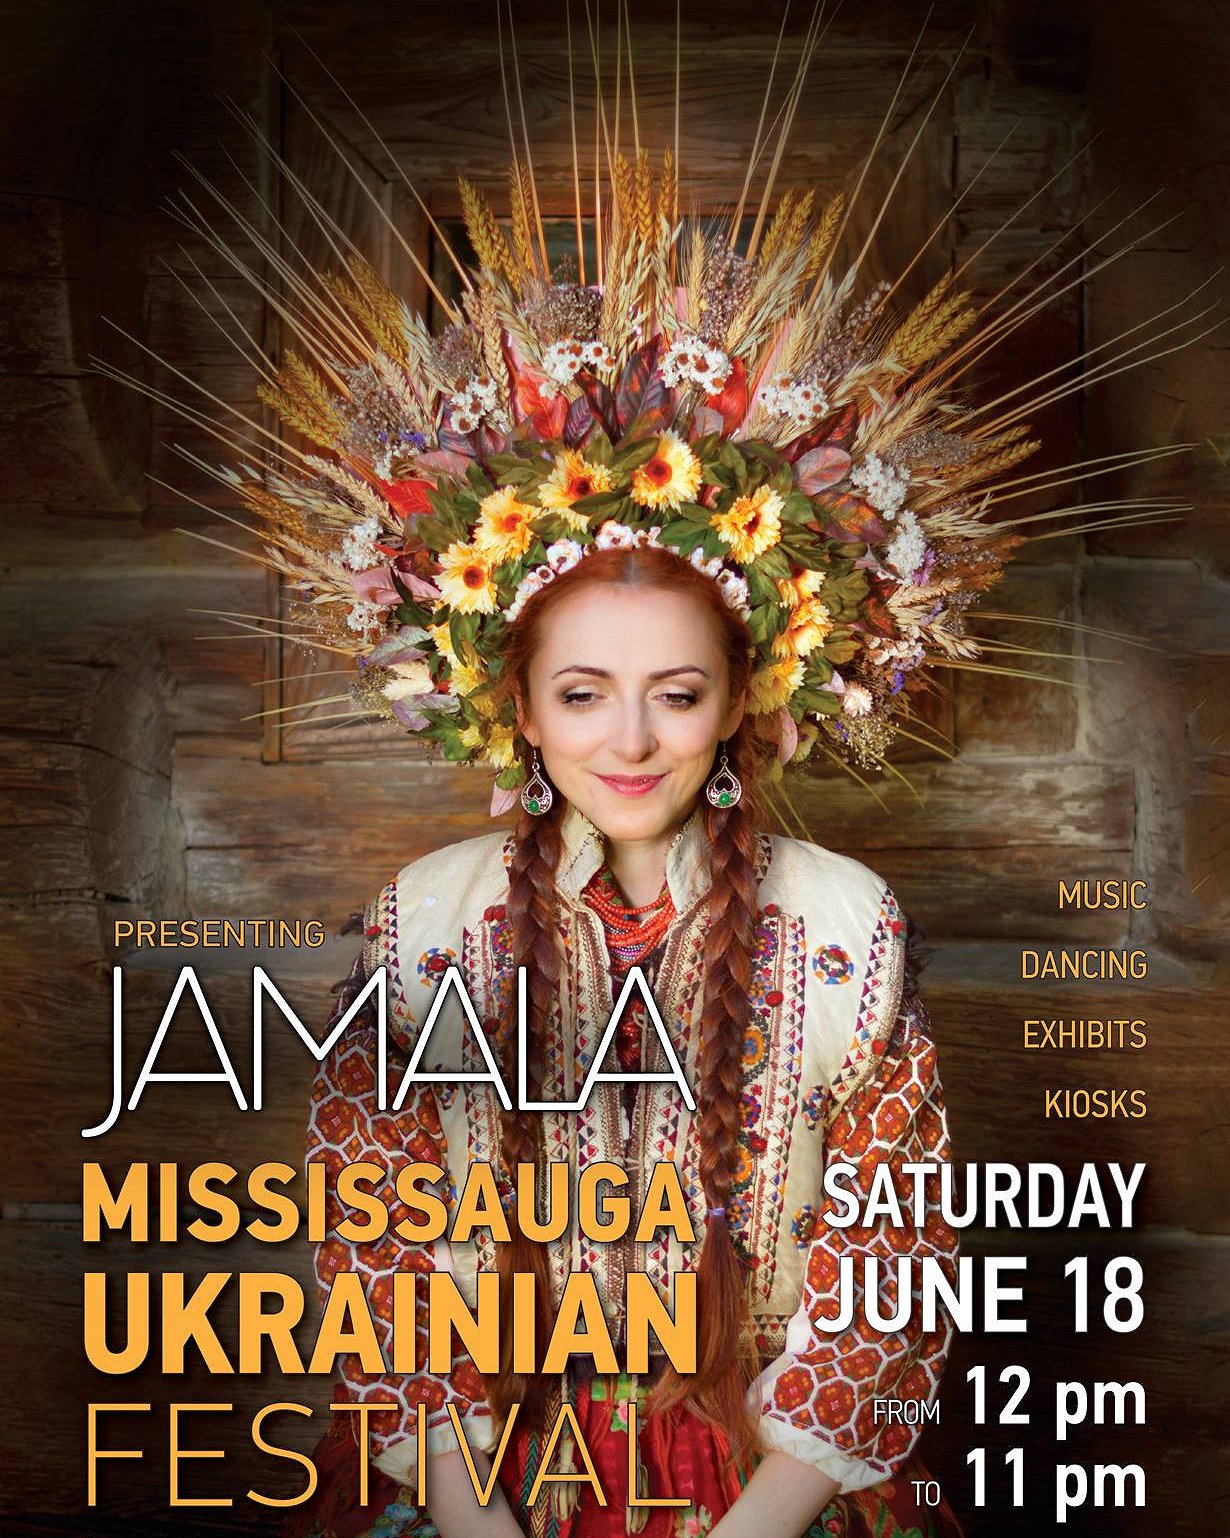 Mississauga Ukrainian Festival Google image from http://www.ukrainianfestival.com/MississaugaFestival.htm